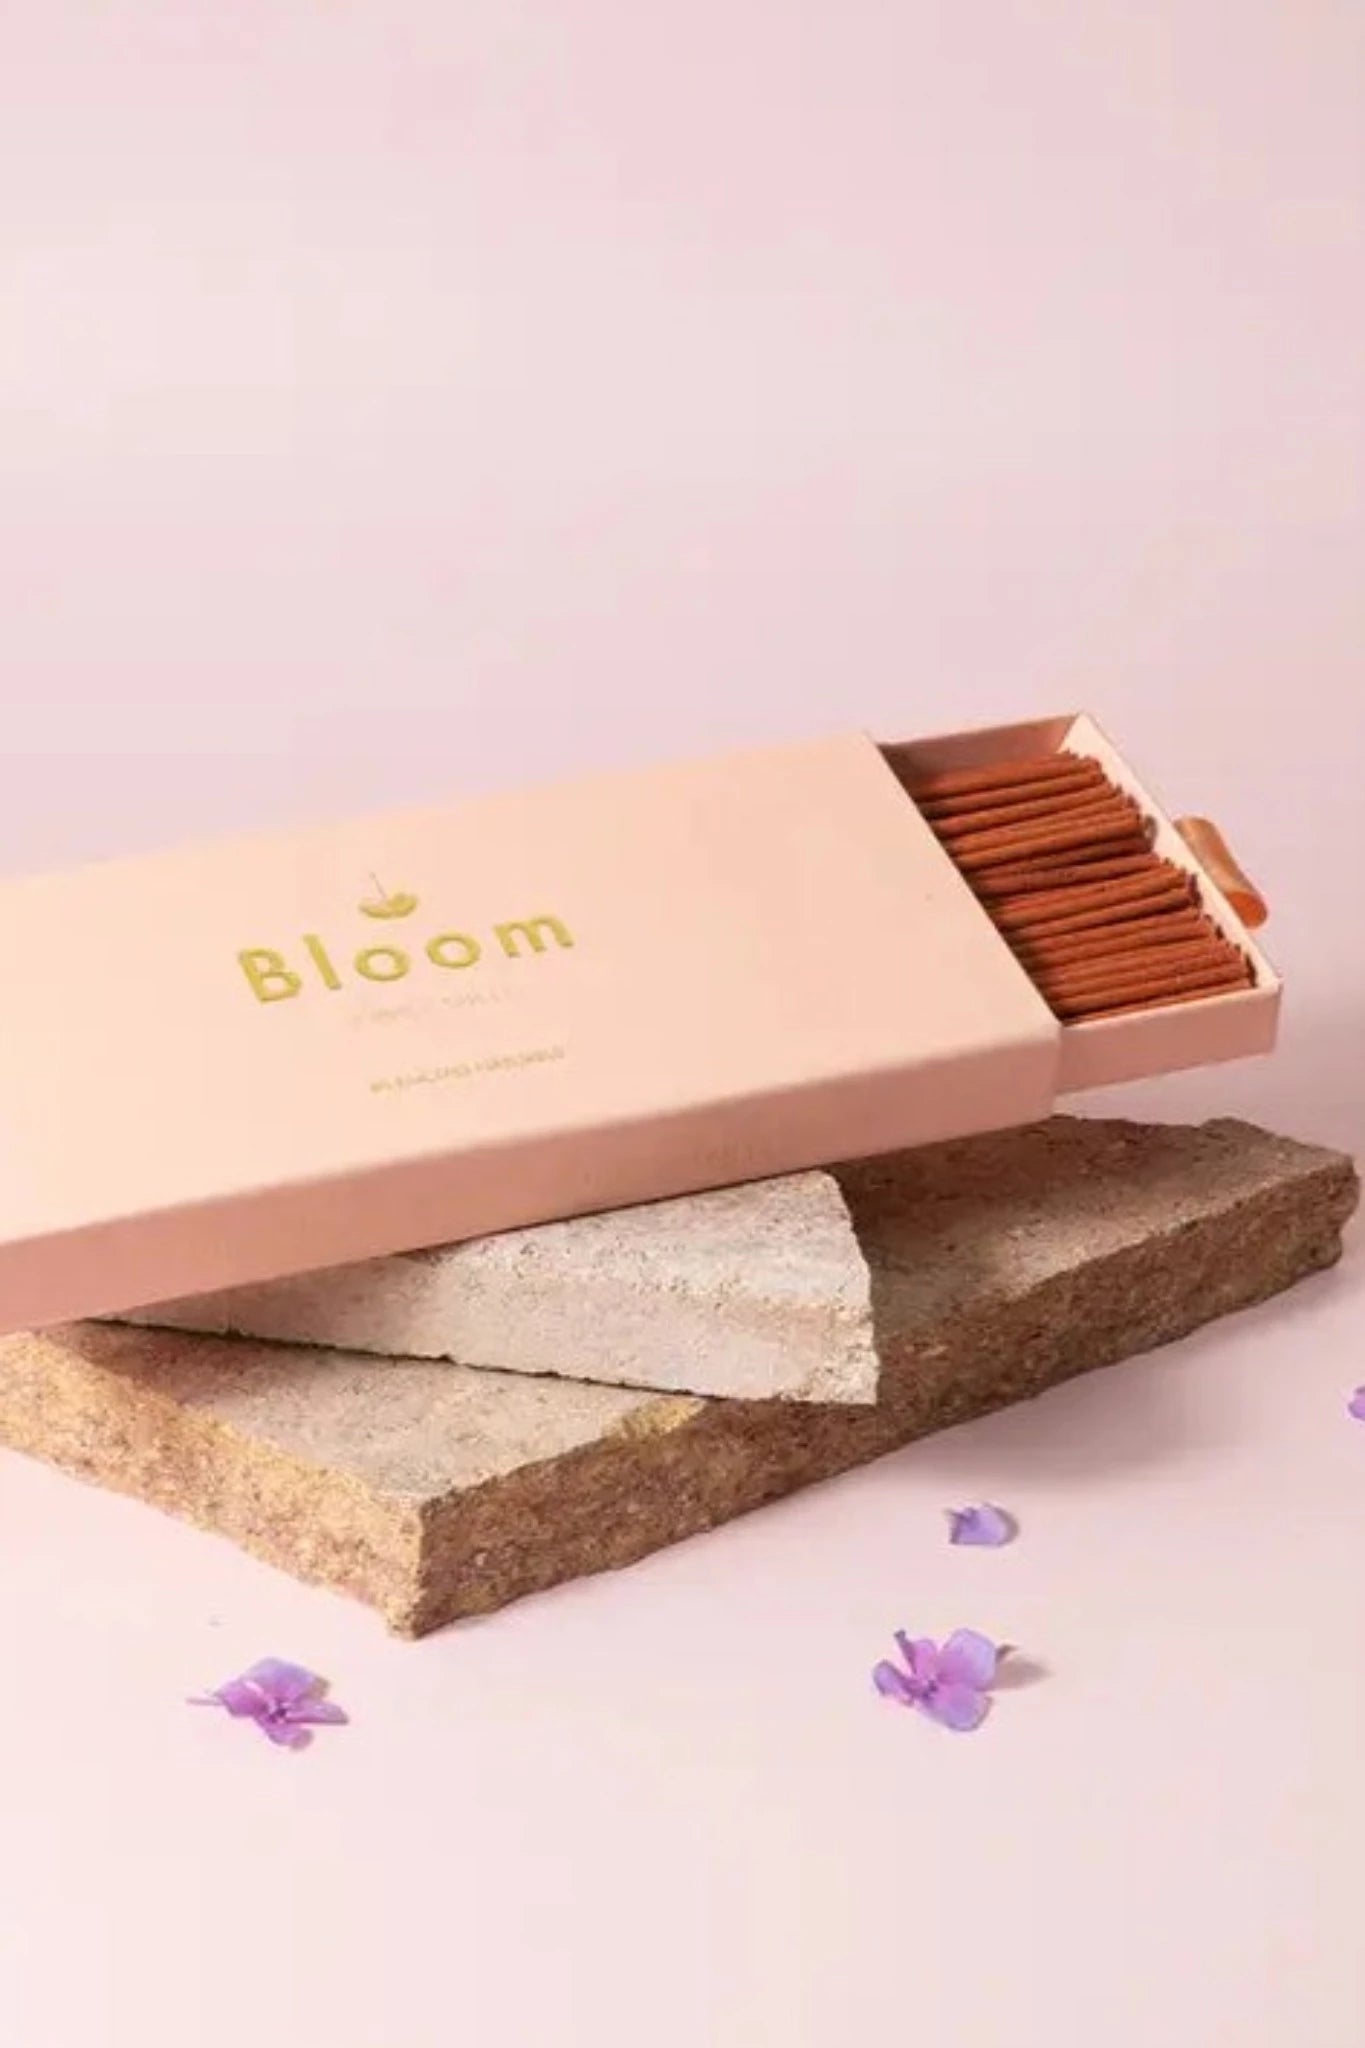 Bloom pink box incense france